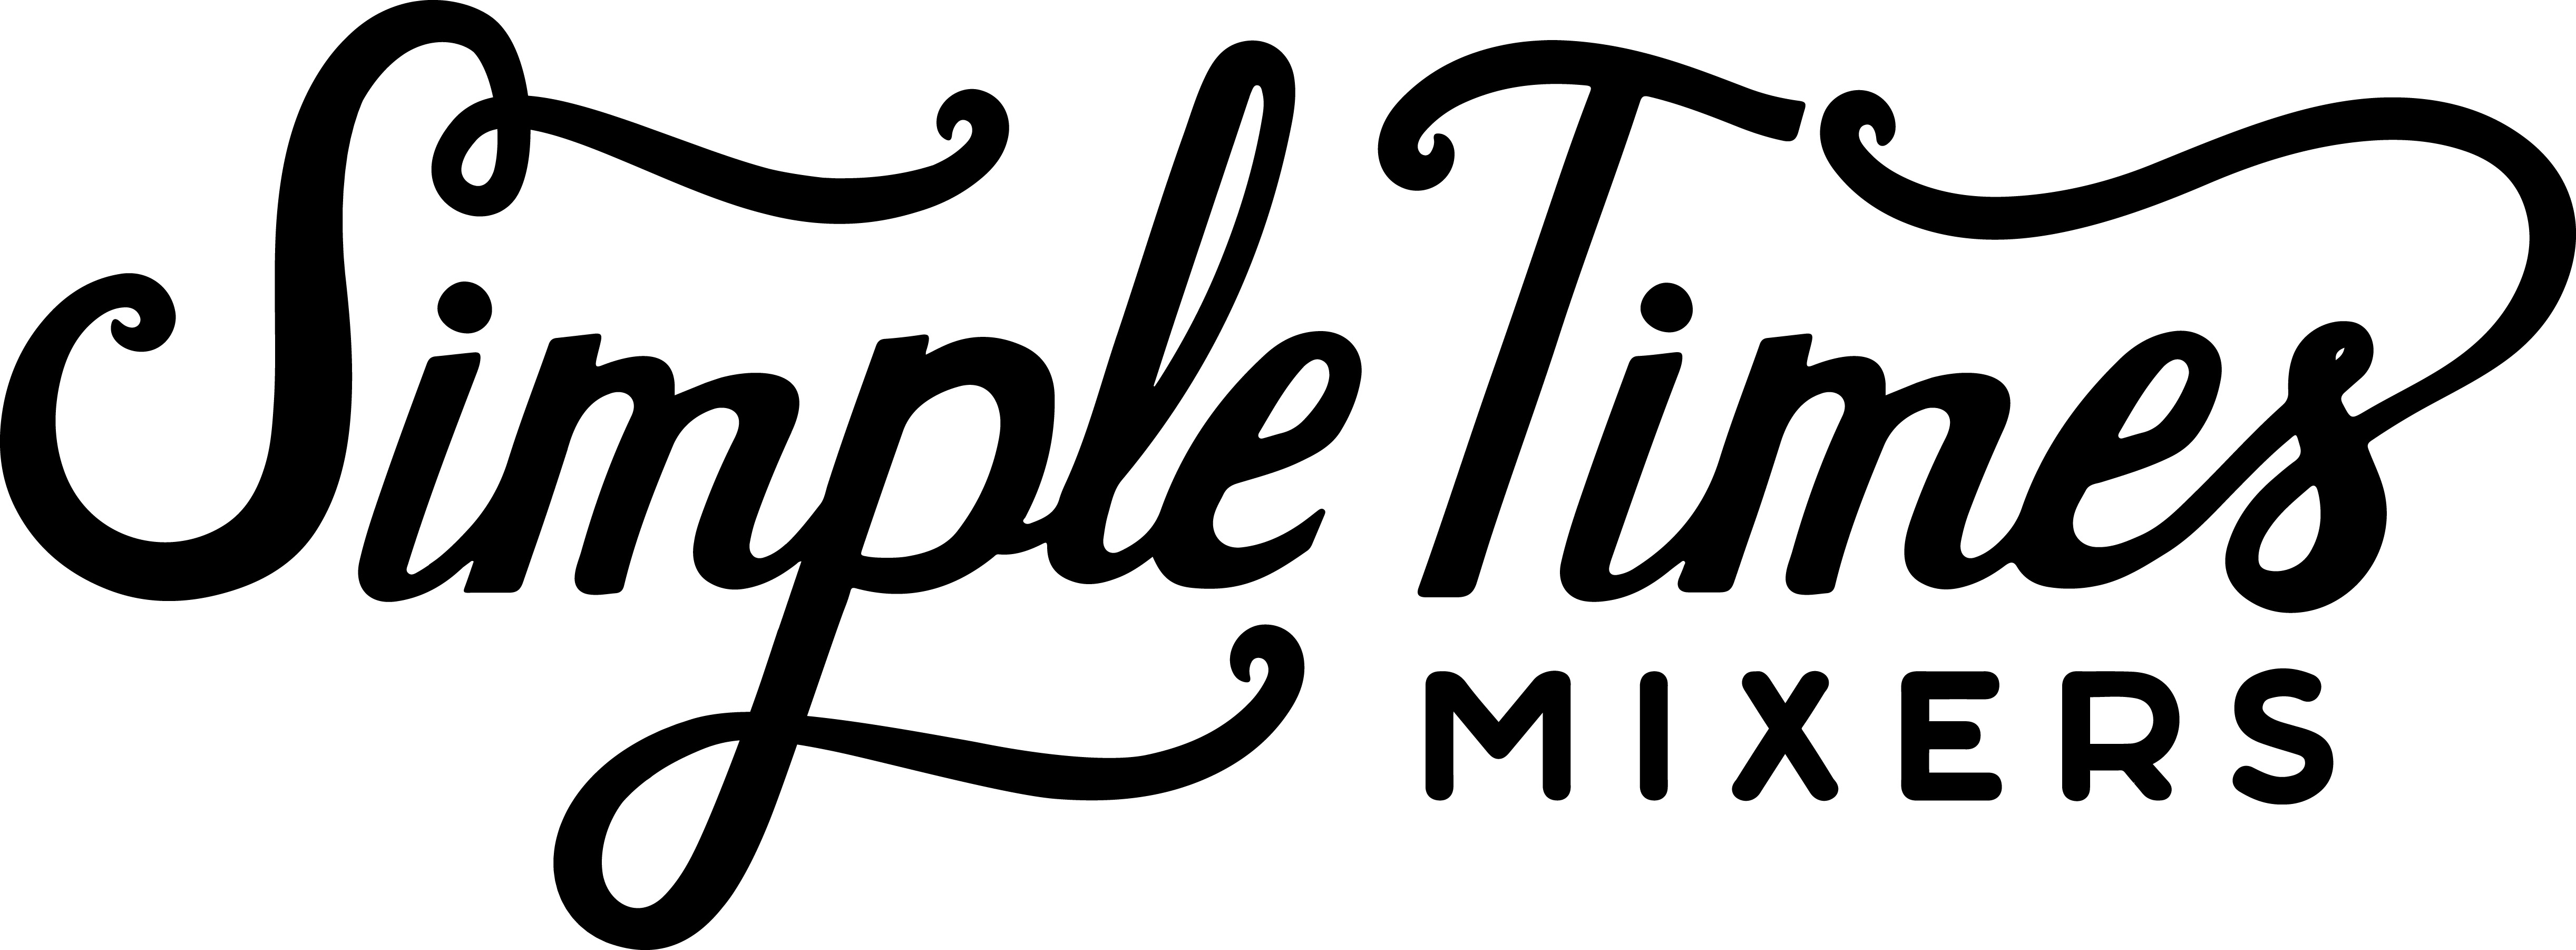 Mixer logo. Mixing logo. Mix logo. ZR Mix logo. Simple mixed